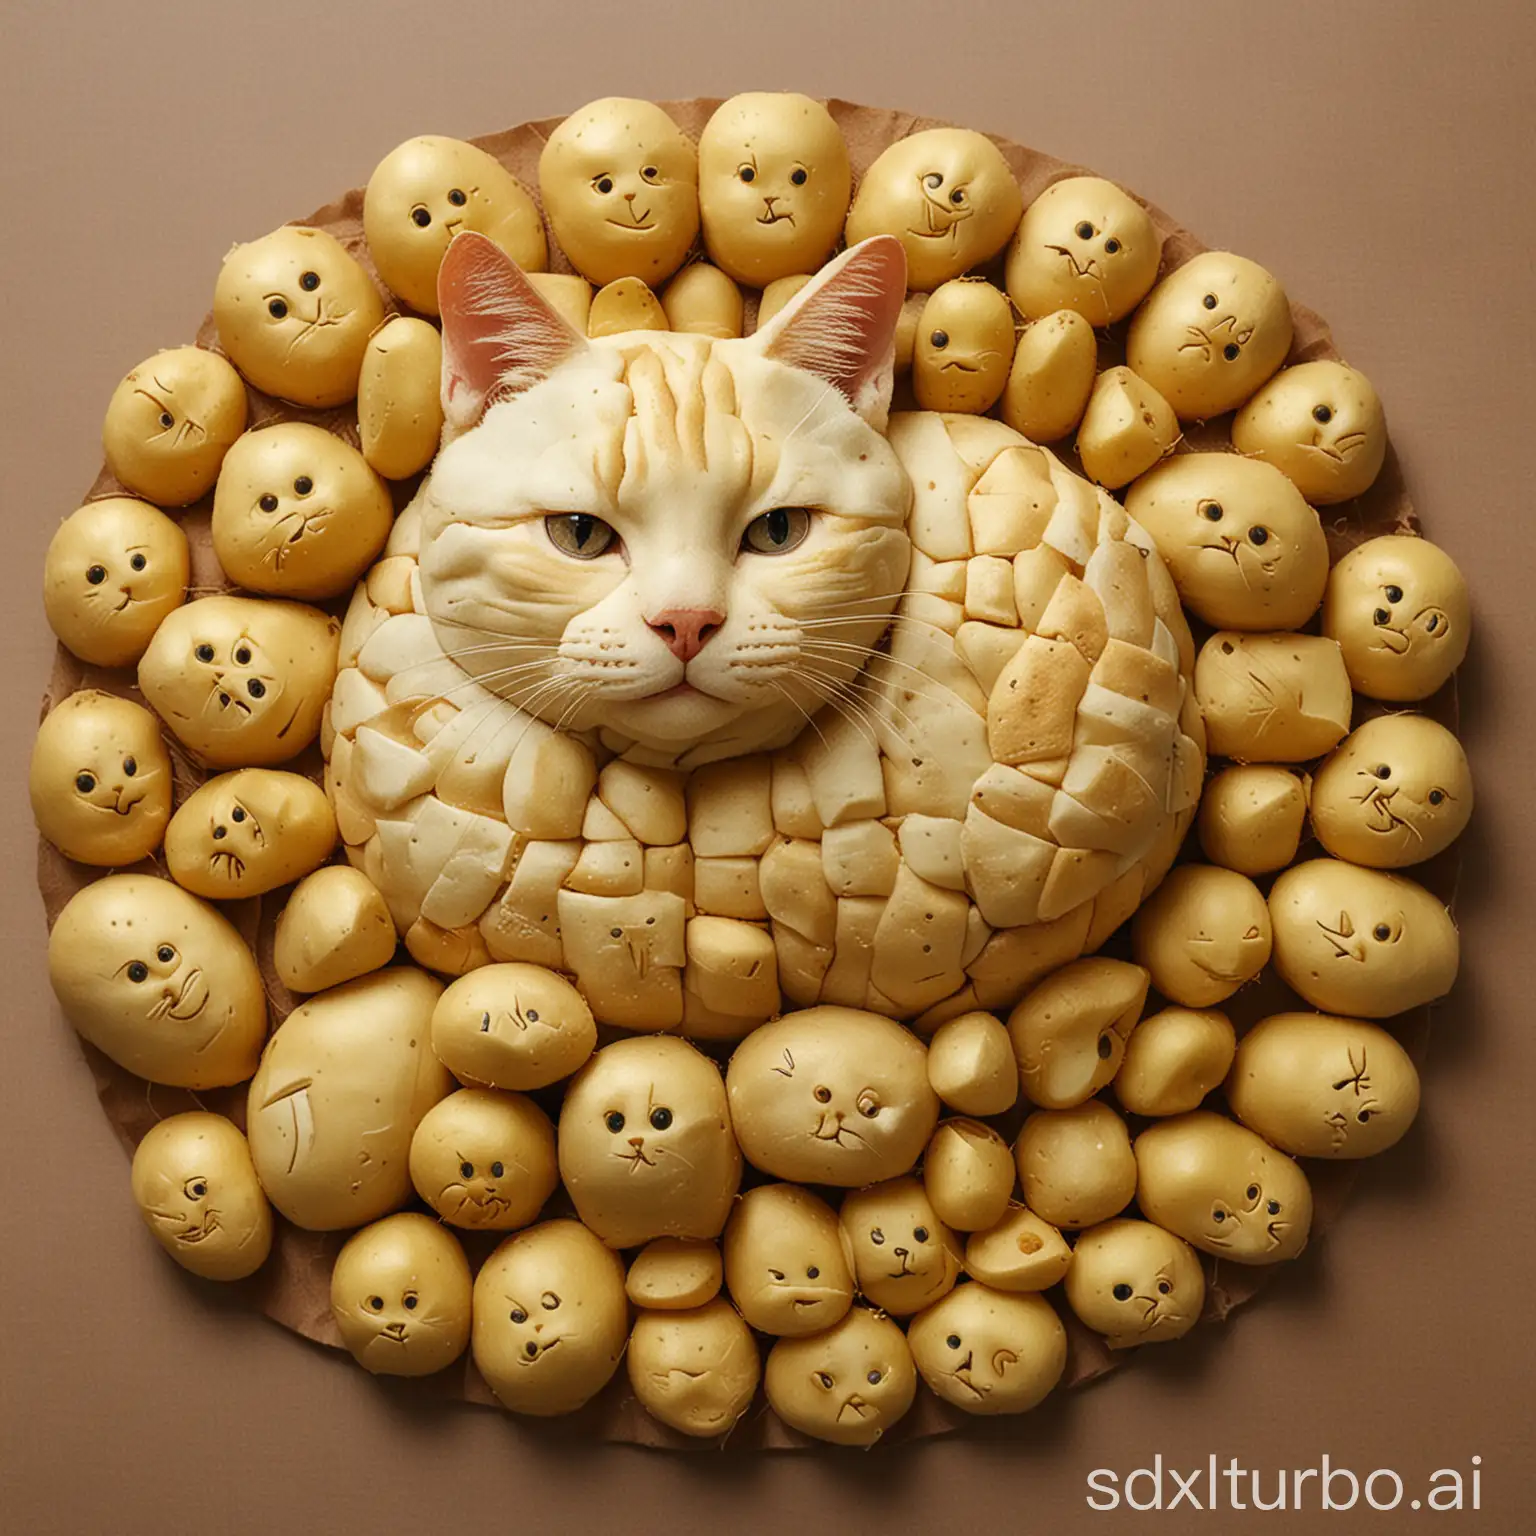 Potato-Cat-Sculpture-Creative-Representation-of-a-Feline-Form-Using-Potatoes